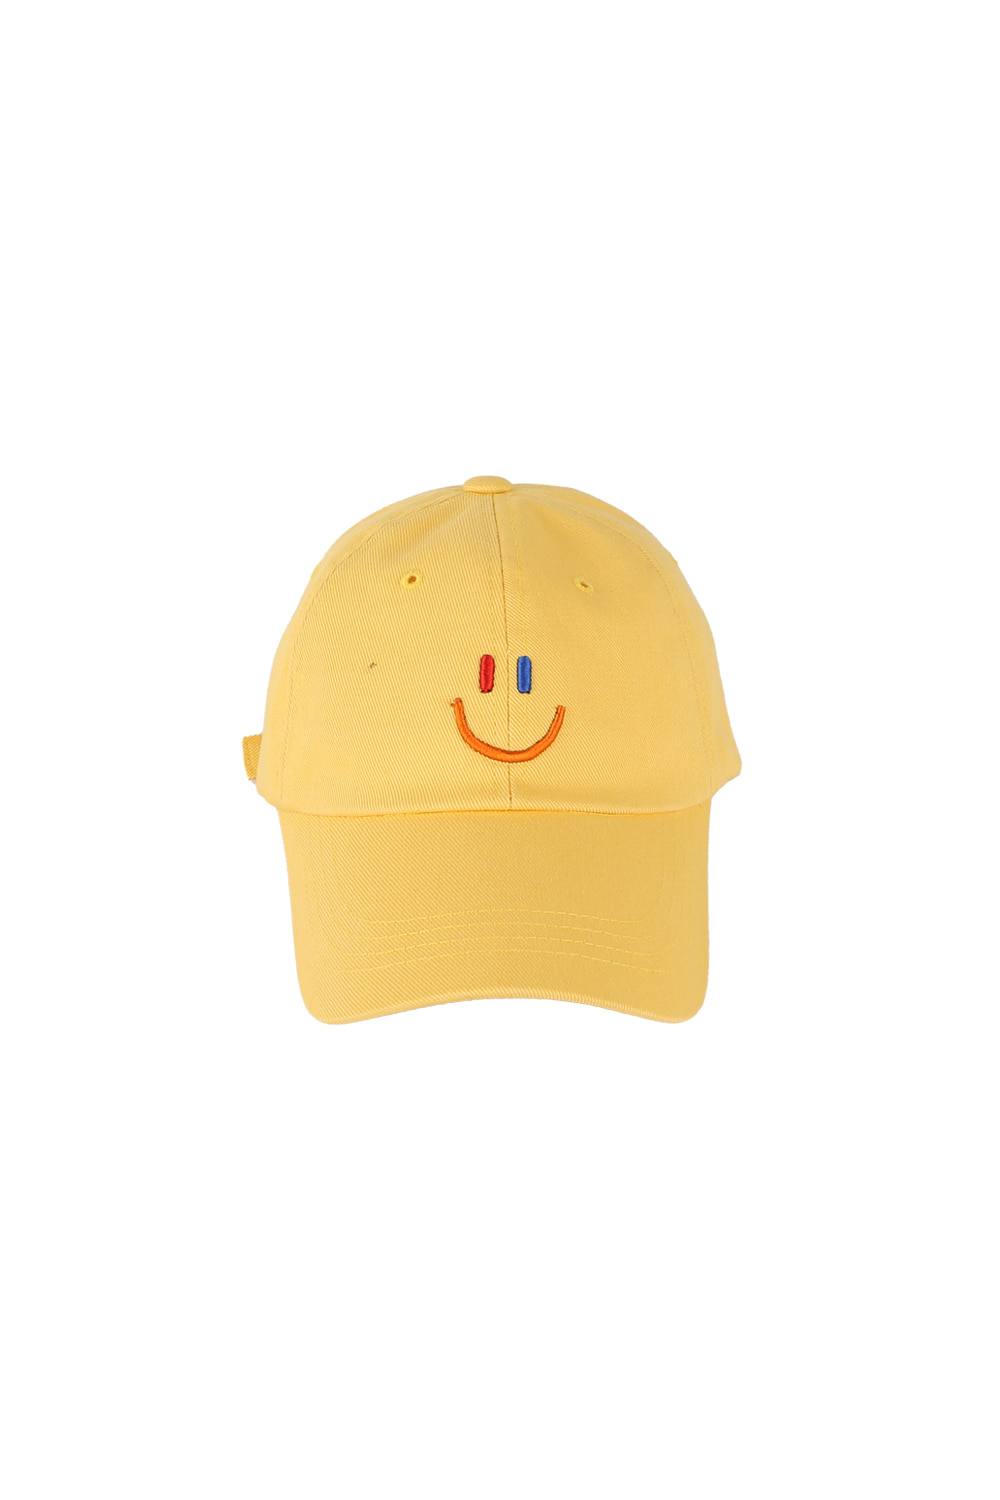 LaLa Smile Ball Cap [Yellow]